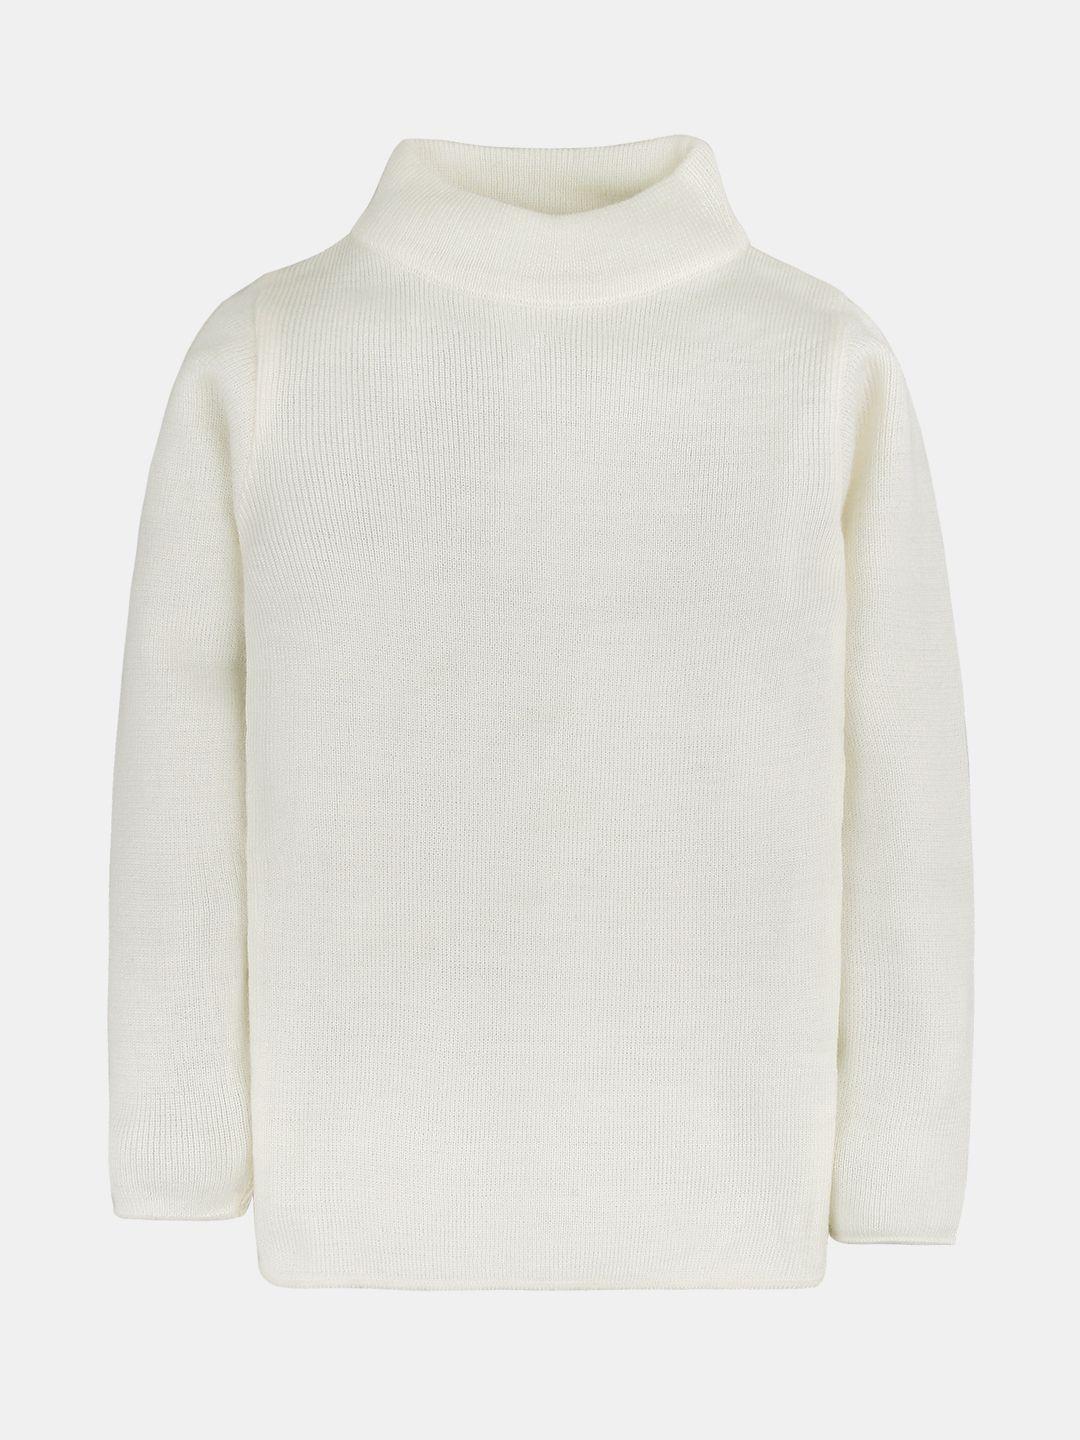 rvk unisex off-white solid sweater